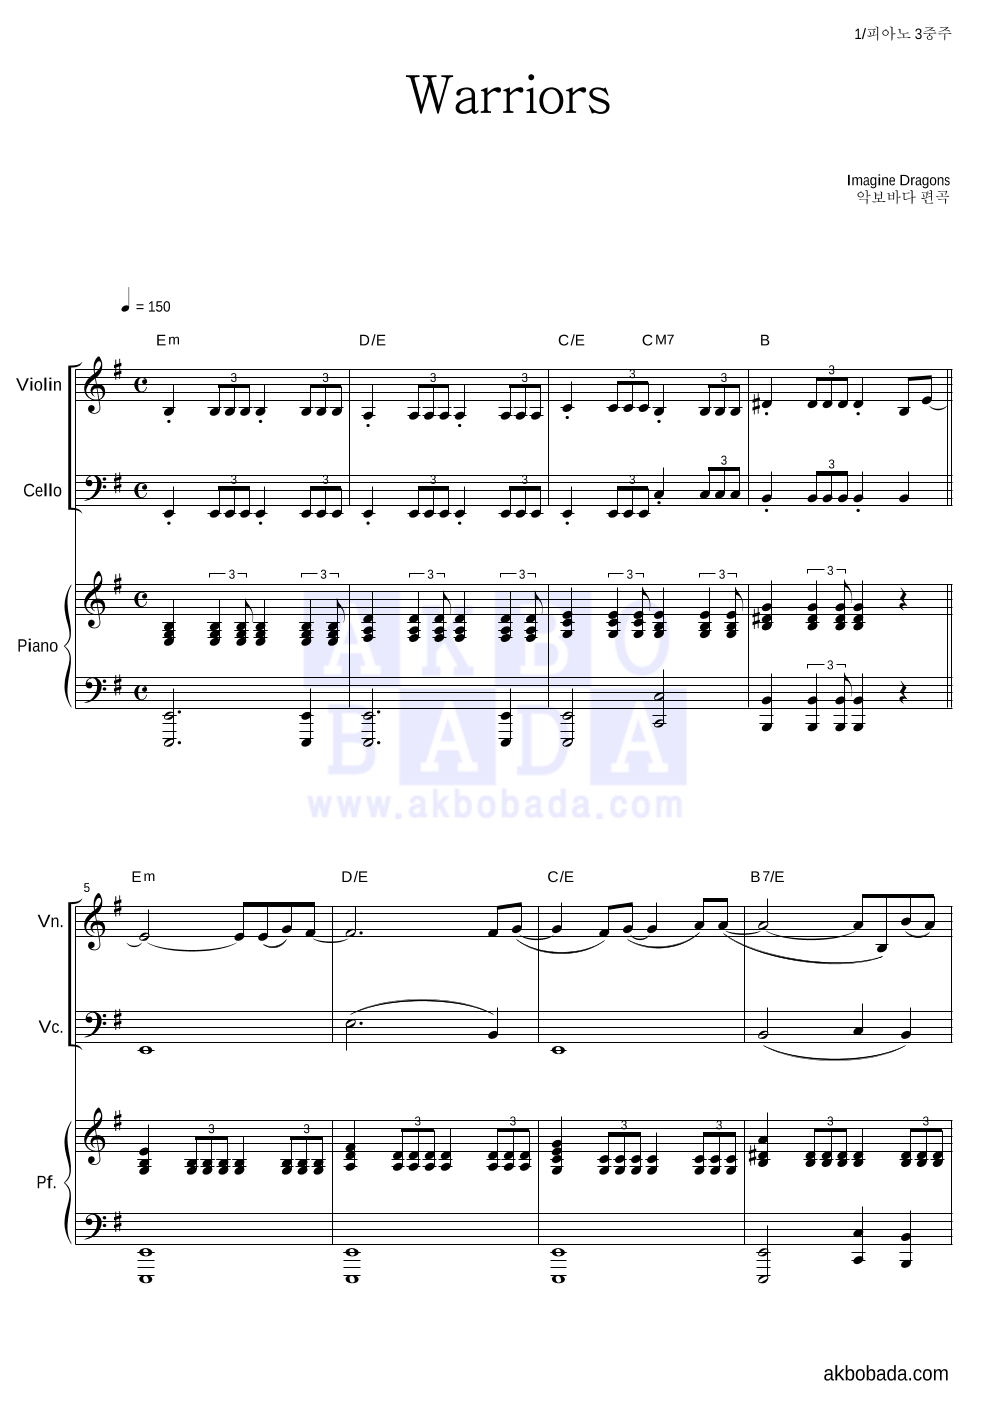 Imagine Dragons - Warriors (리그 오브 레전드 : 2014 월드 챔피언십 주제곡) 피아노3중주 악보 